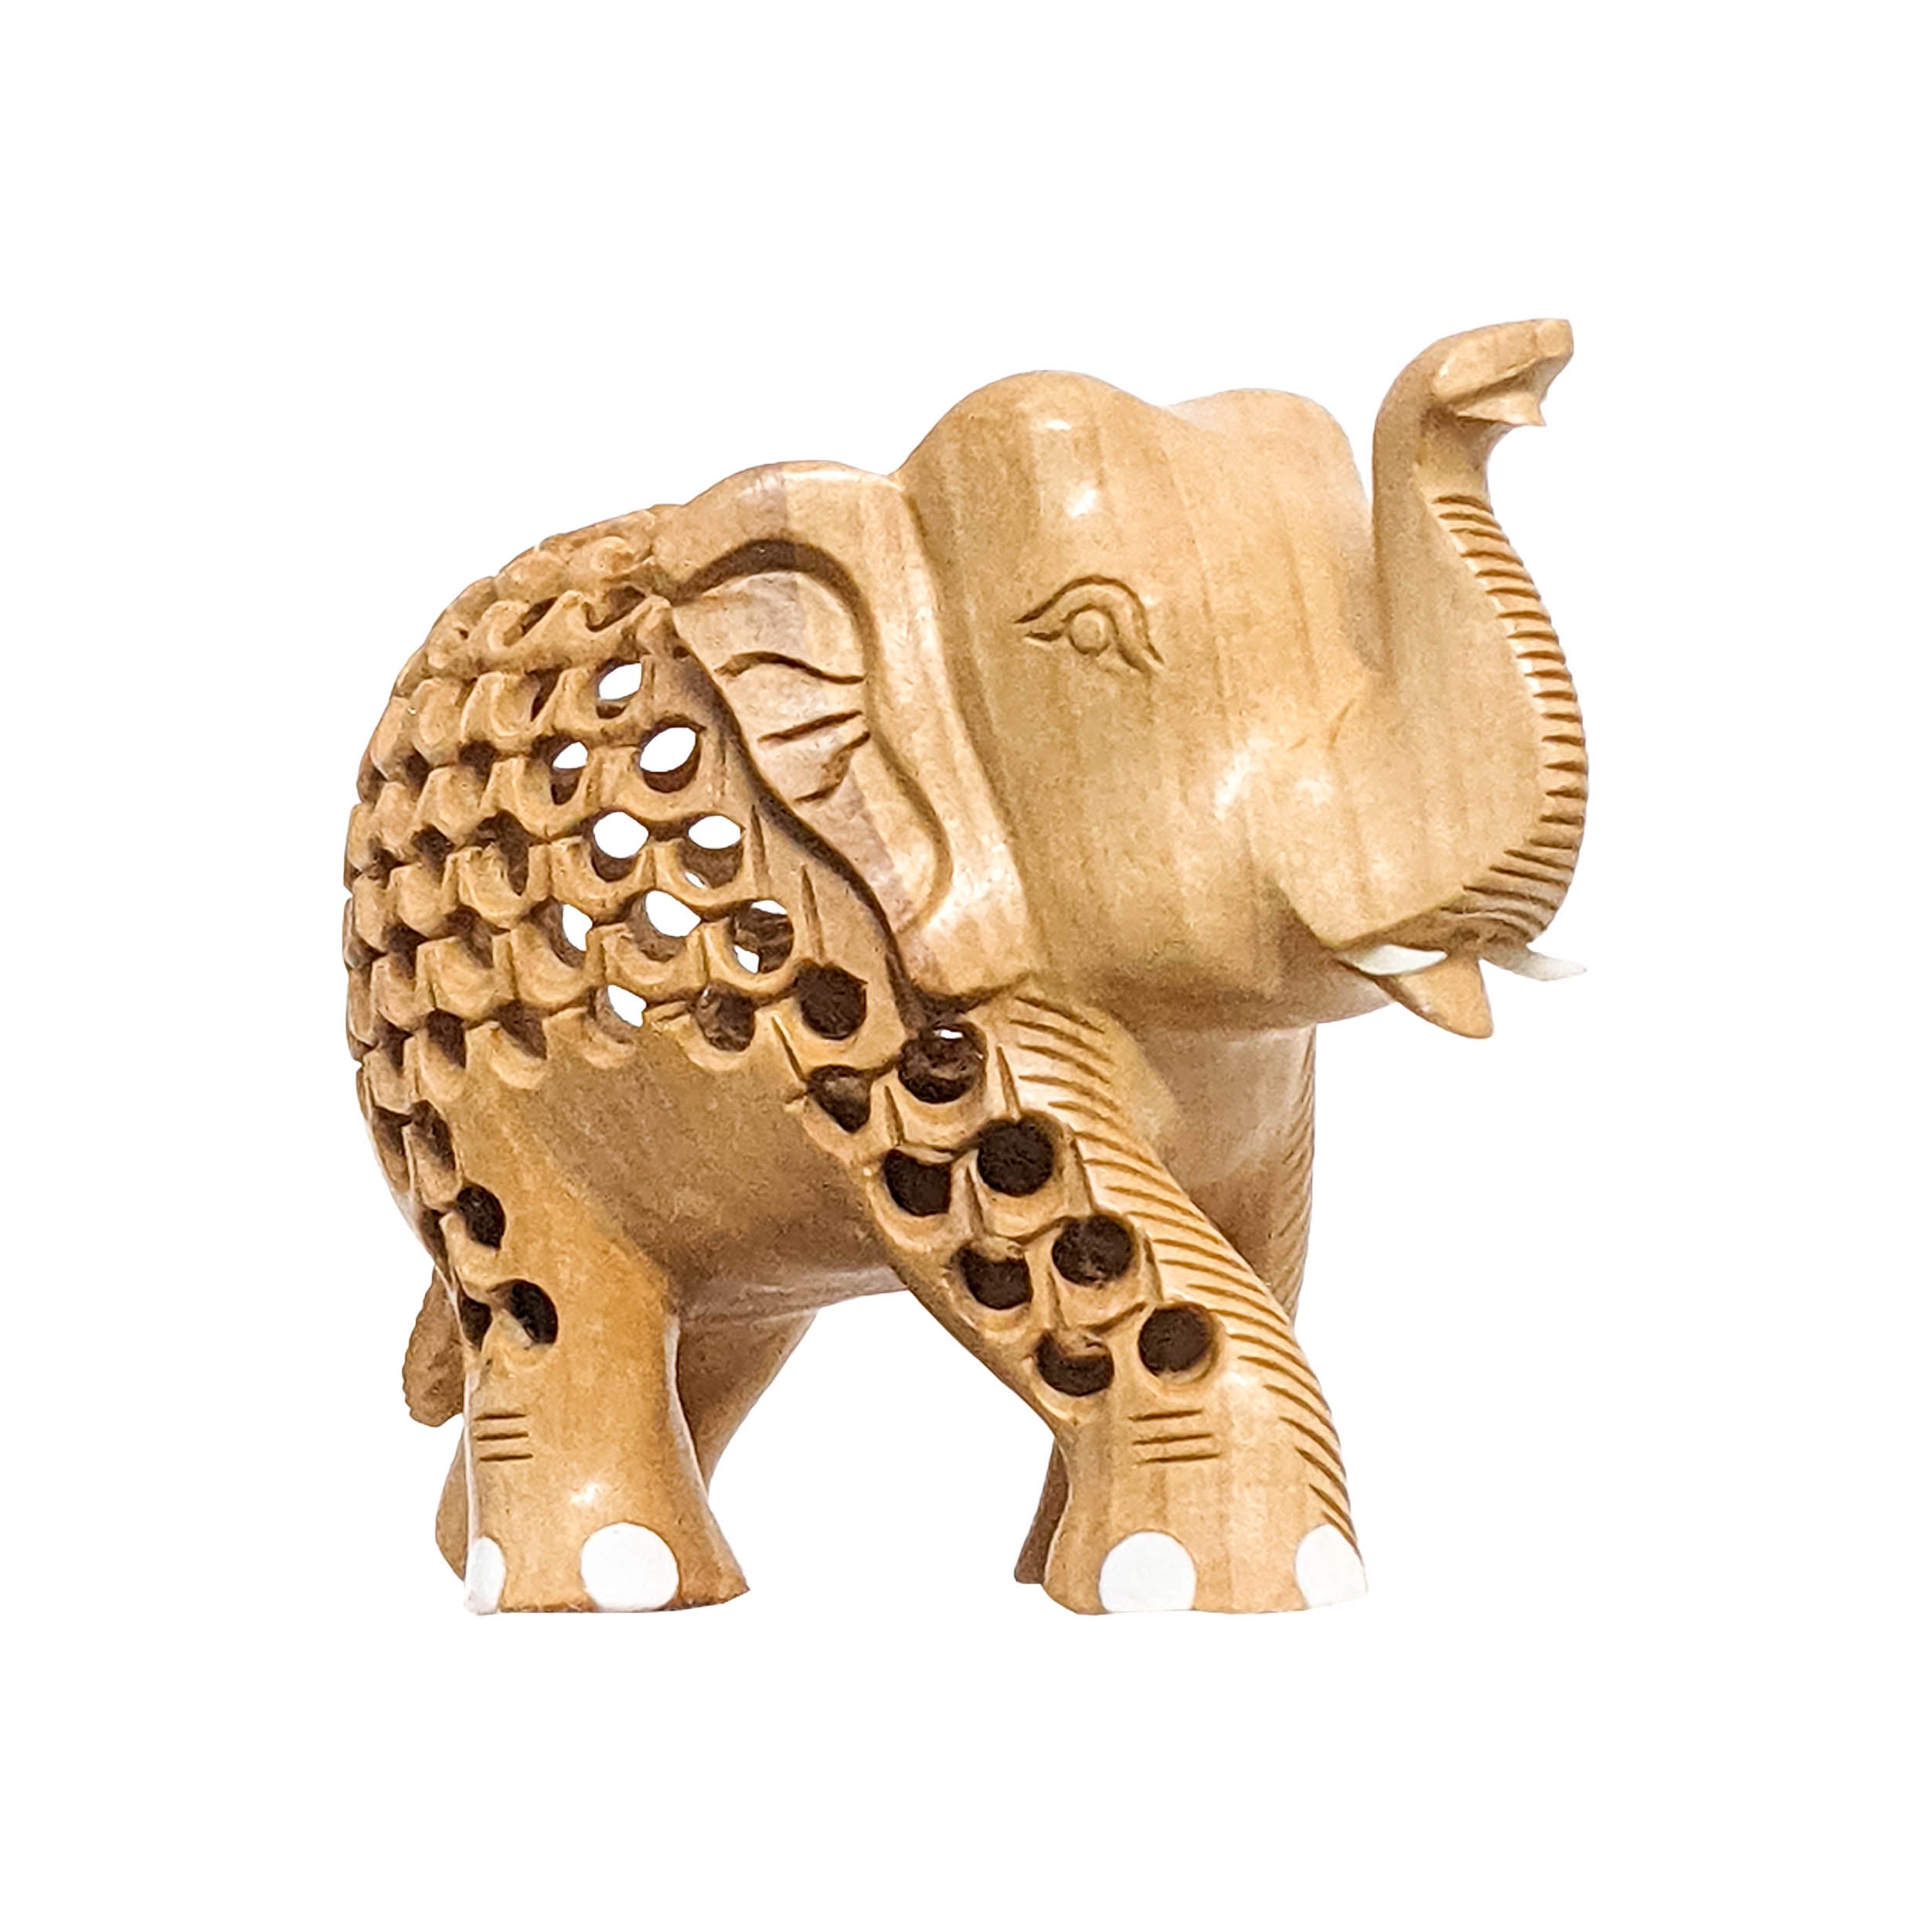 Wooden Handcrafted Elephant Sculpture